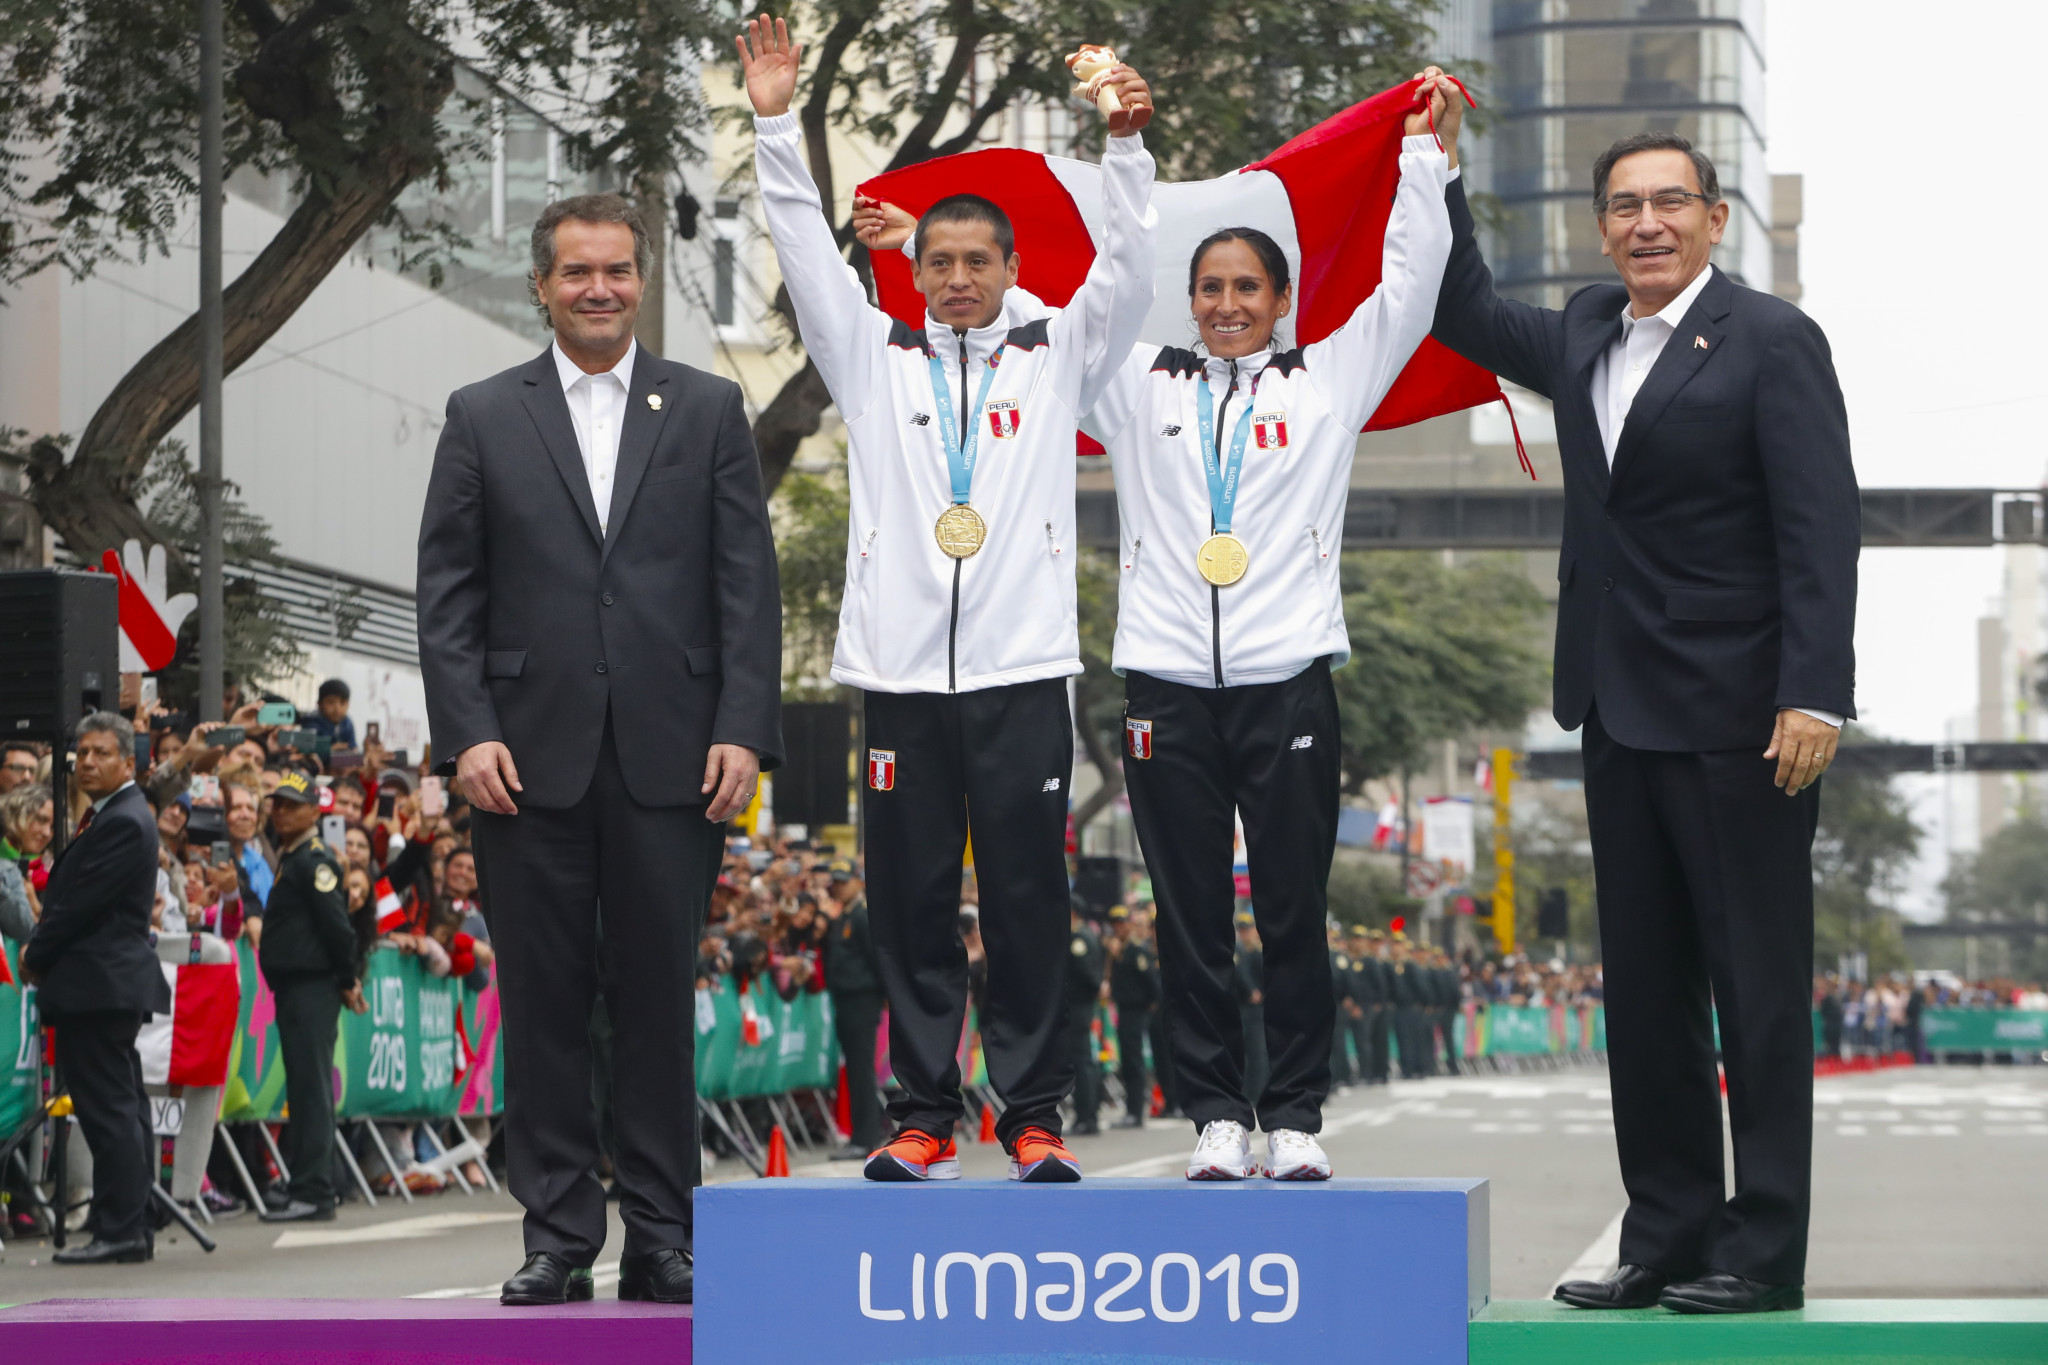 Peru’s President Martín Vizcarra, right, presented the medals ©Lima 2019